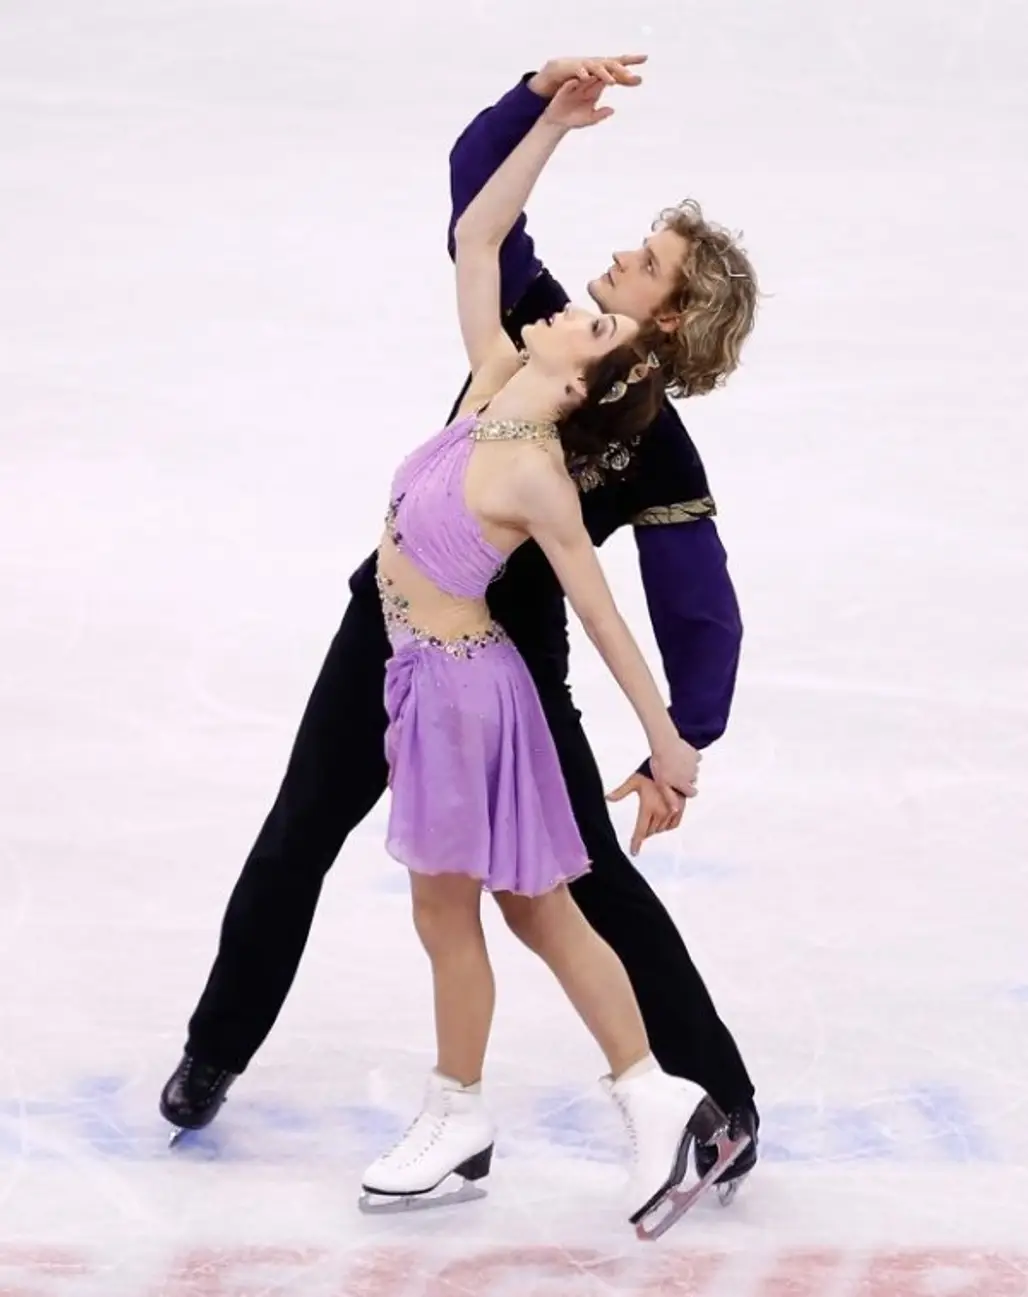 Meryl and Charlie - Team USA - Ice Dance Free Dance